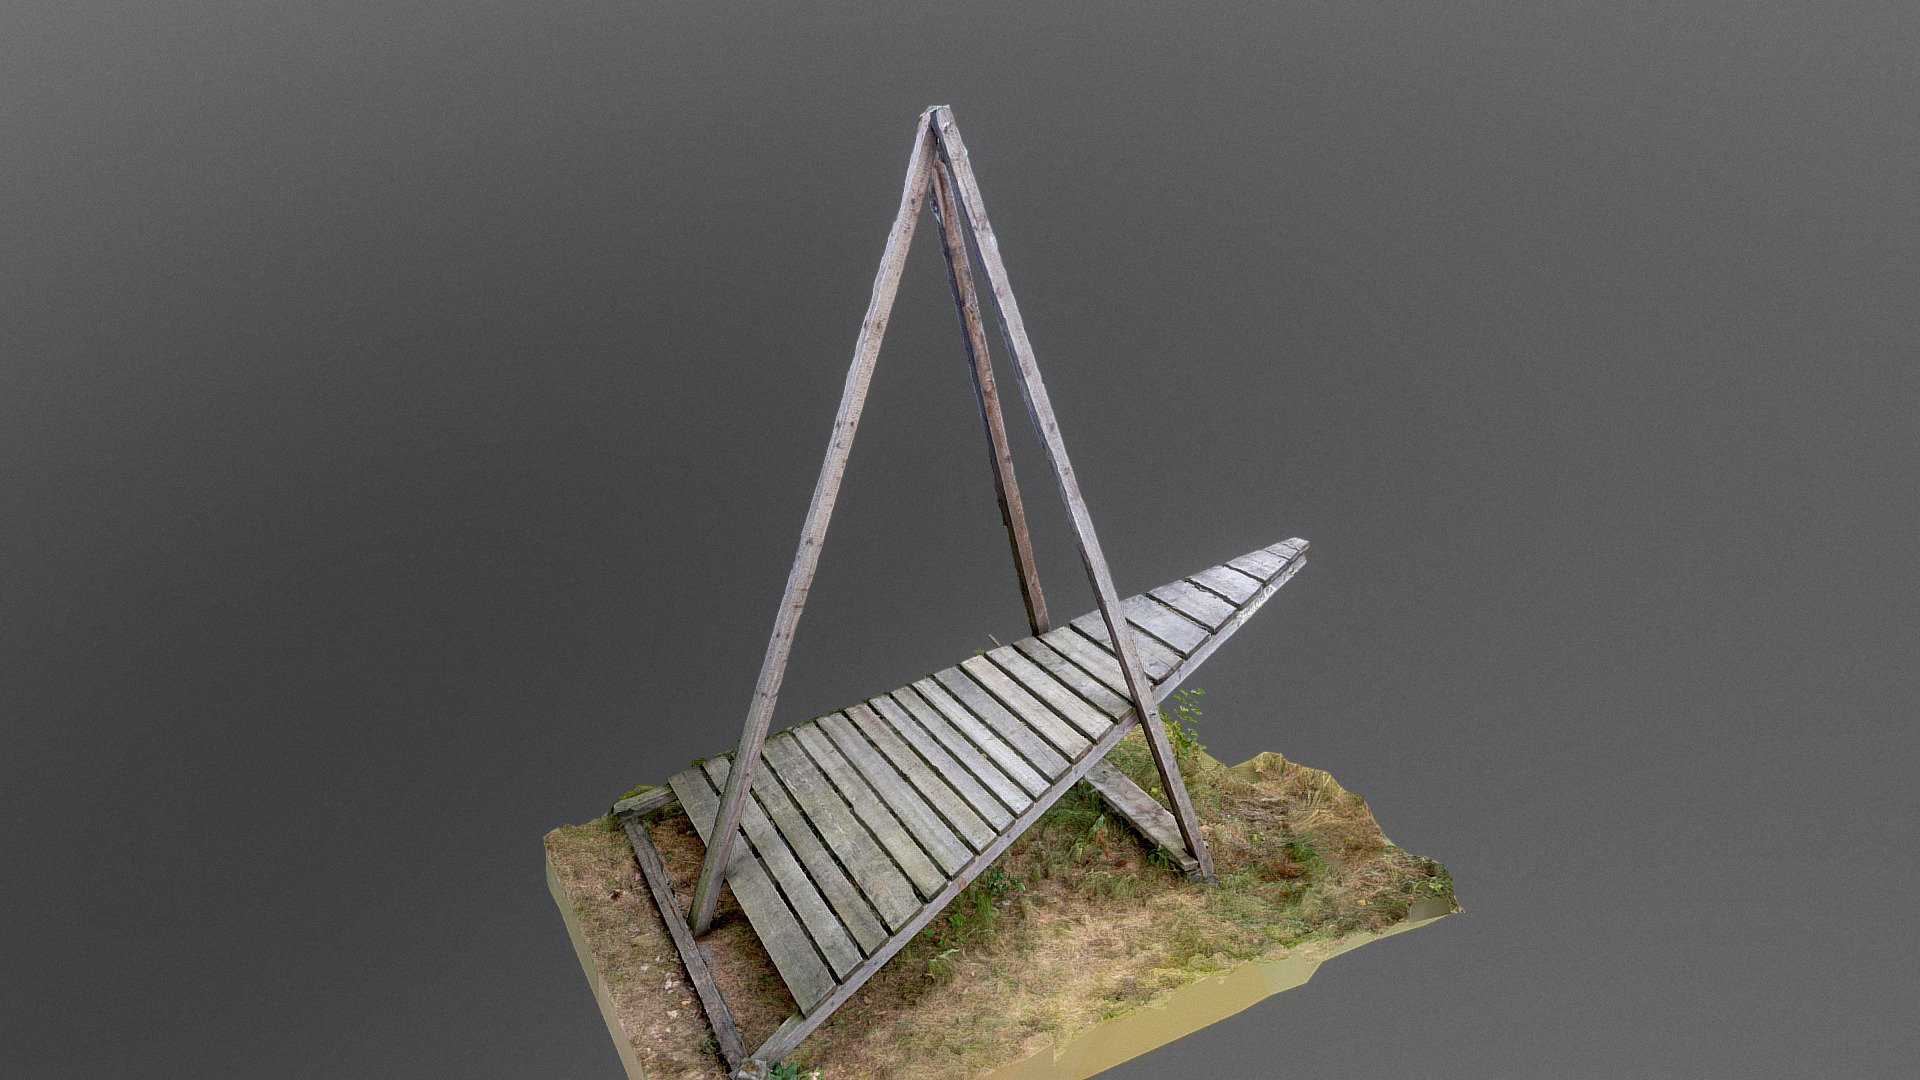 Friedrich lookout tower platform,  experimental wooden architecture project

photogrametry scan (24MP, 250) - Friedrich lookout tower platform - 3D model by matousekfoto 3d model